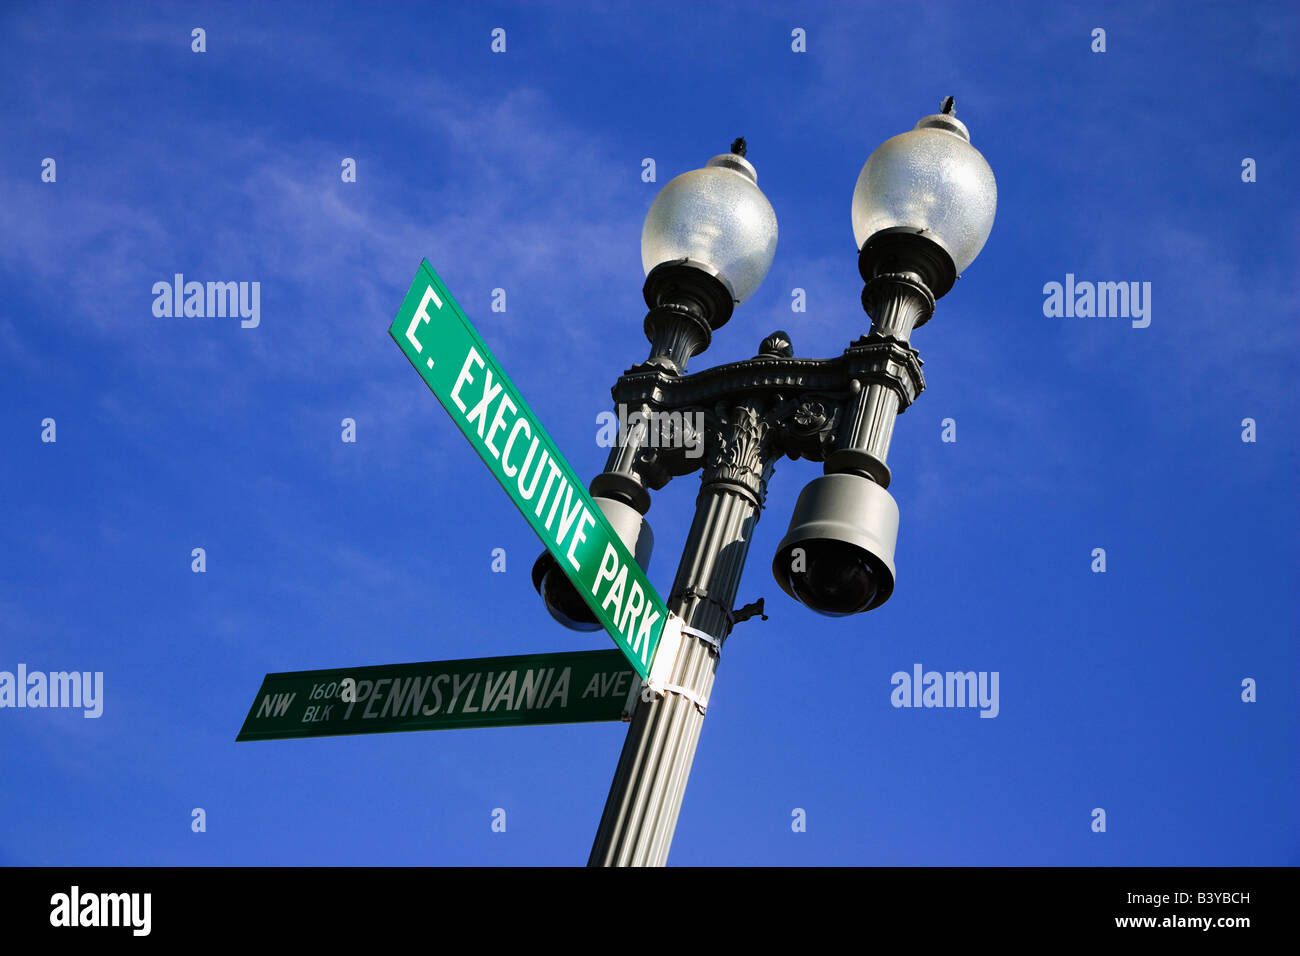 USA, Washington, D.C. Close-up of historic Pennsylvania Ave. street sign. Stock Photo